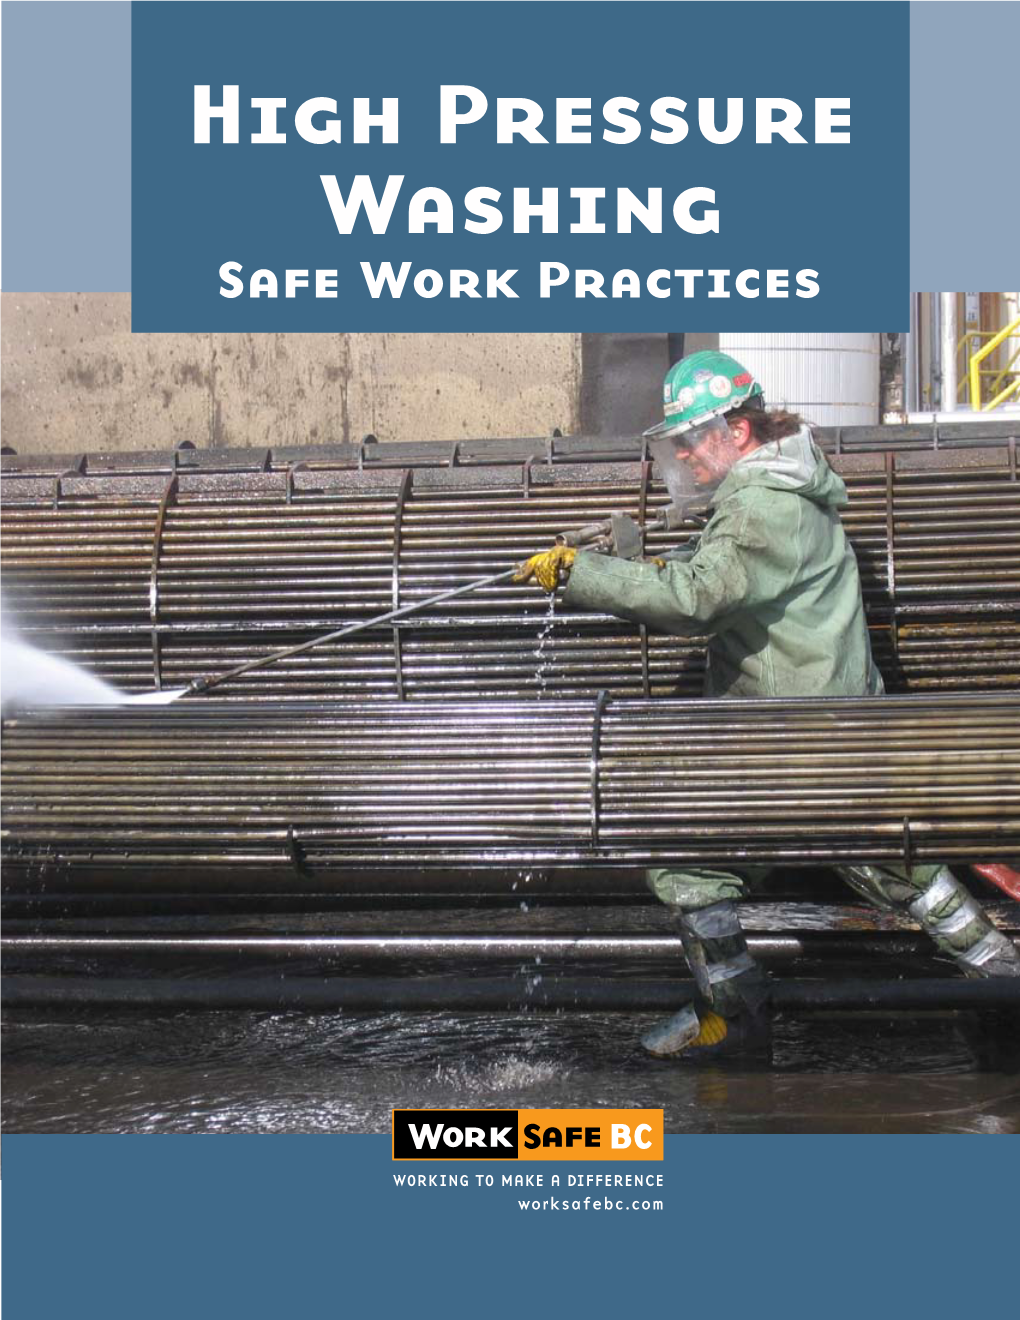 High Pressure Washing: Safe Work Practices